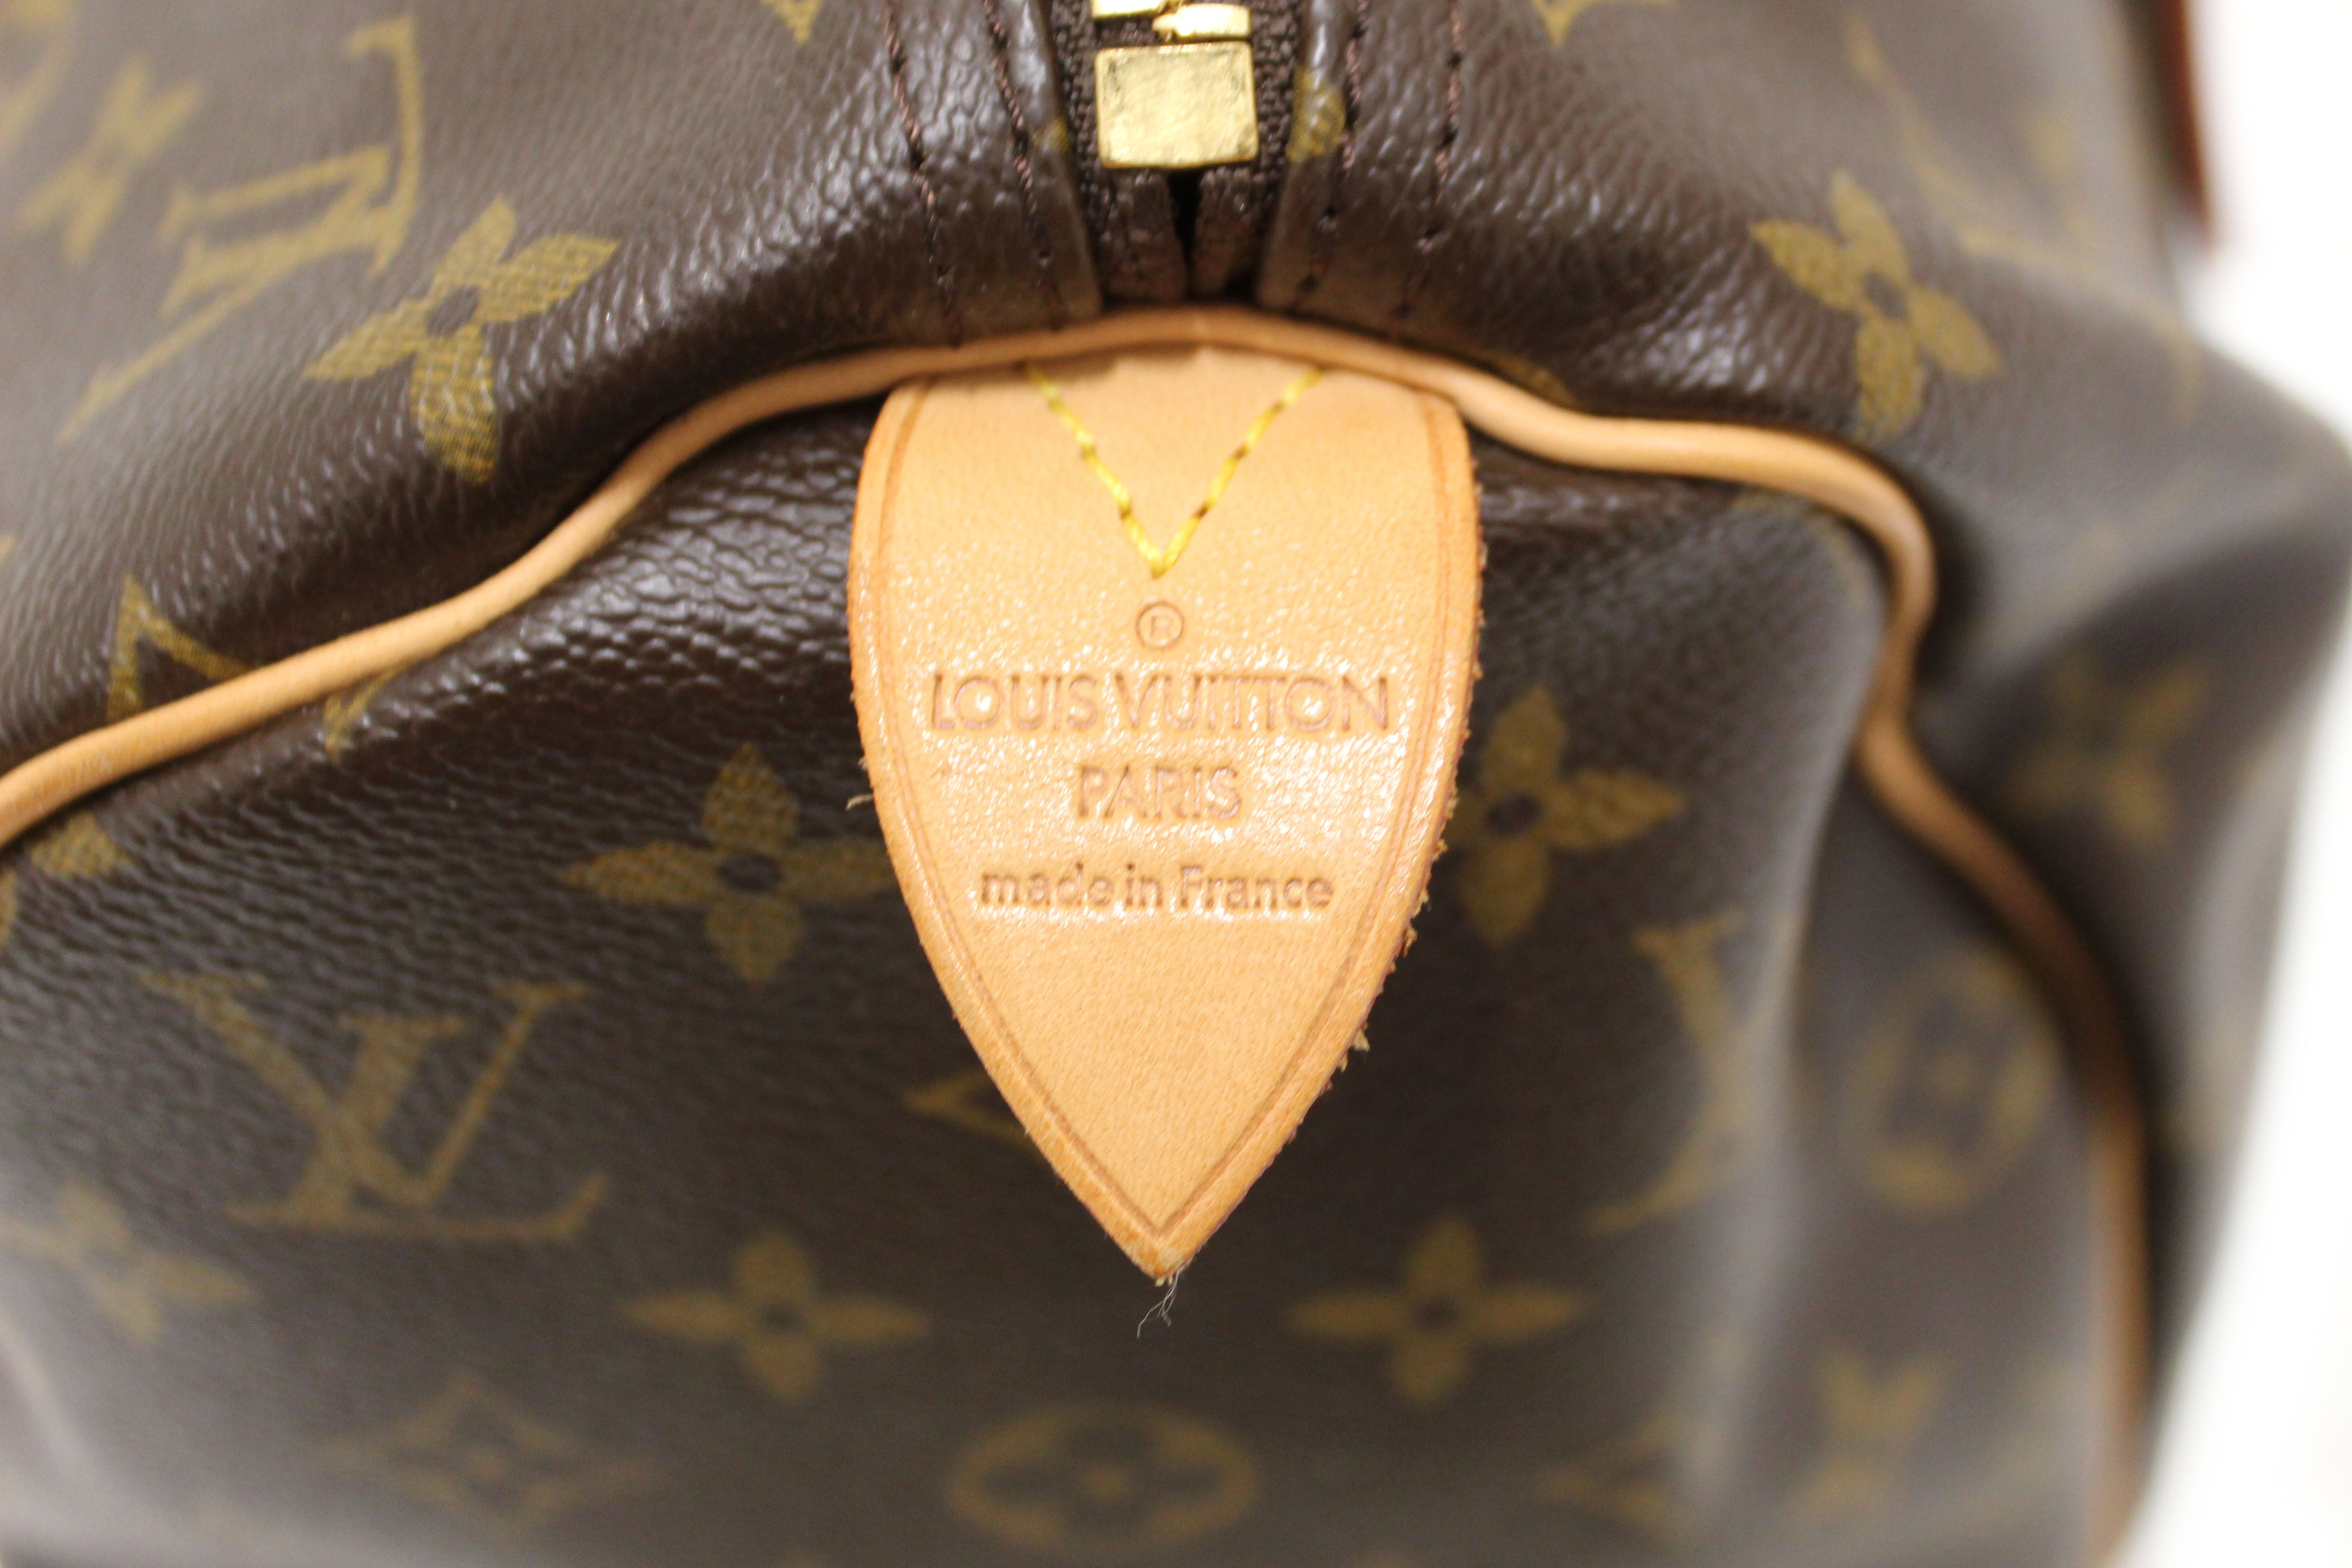 Authentic Louis Vuitton Classic Monogram Keepall 45 Travel Bag